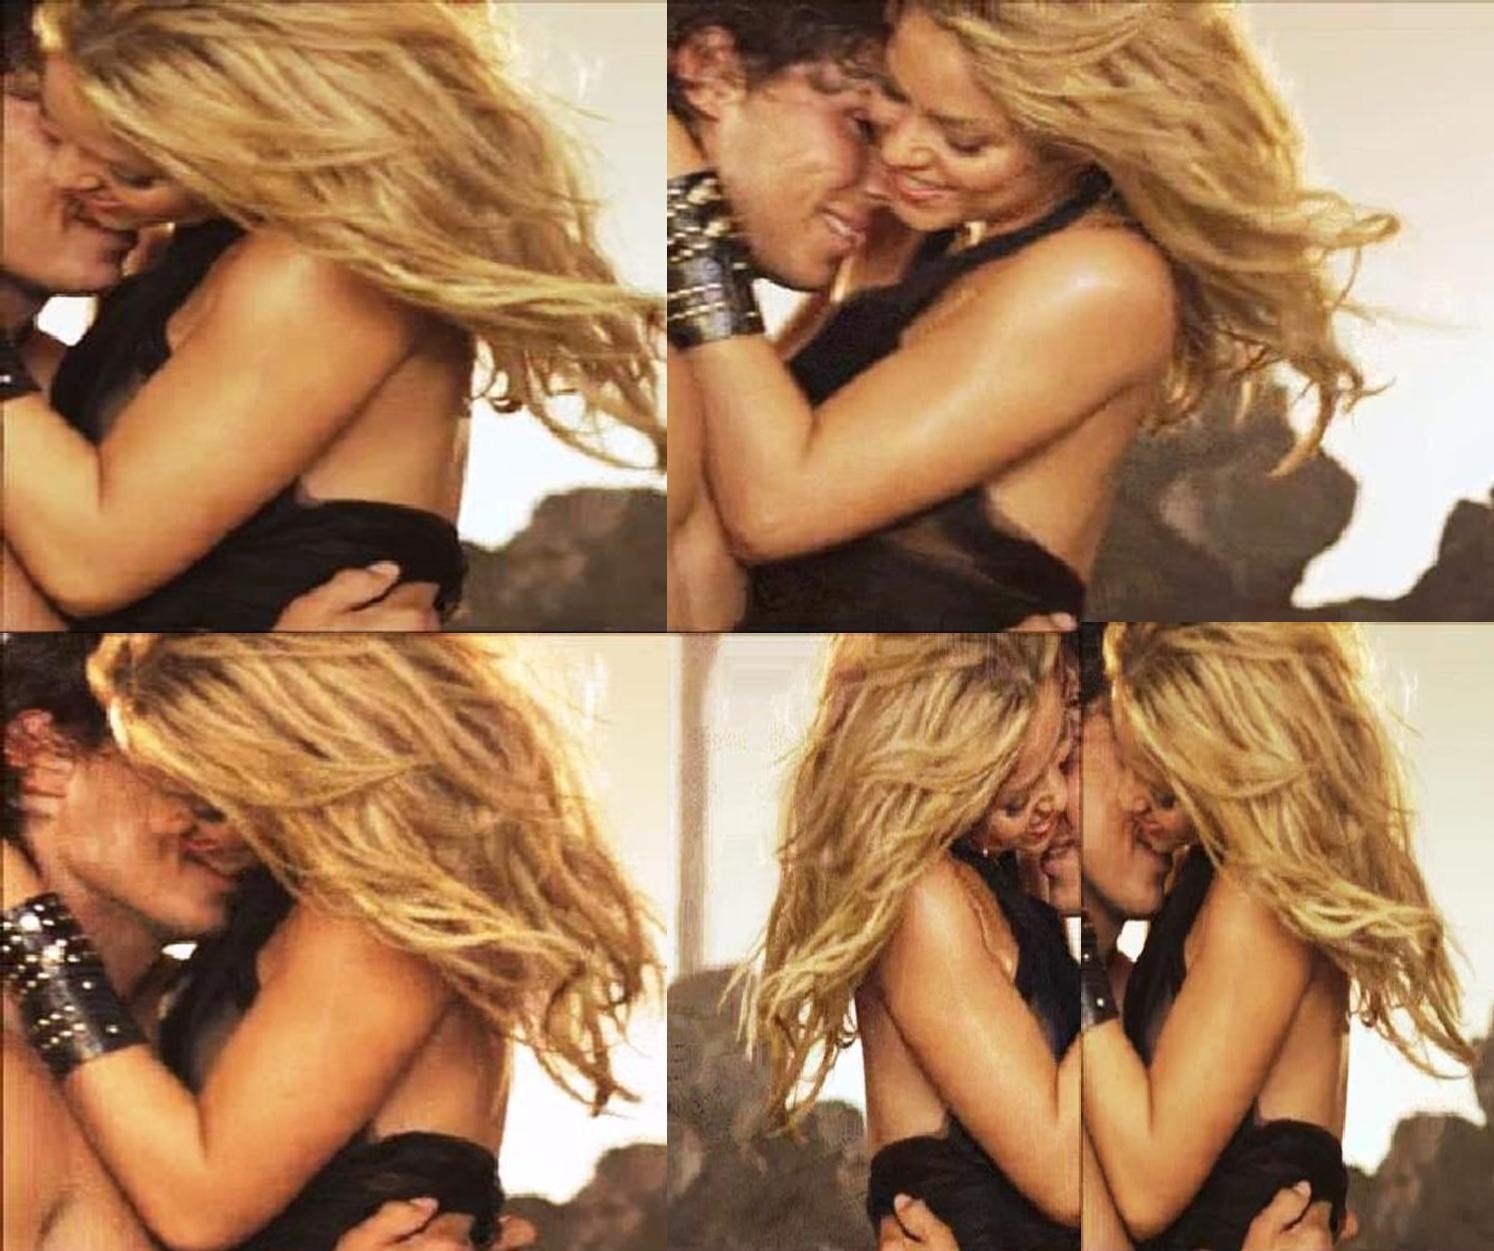 Rafael Nadal Photo: Shakira wanted all or nothing.